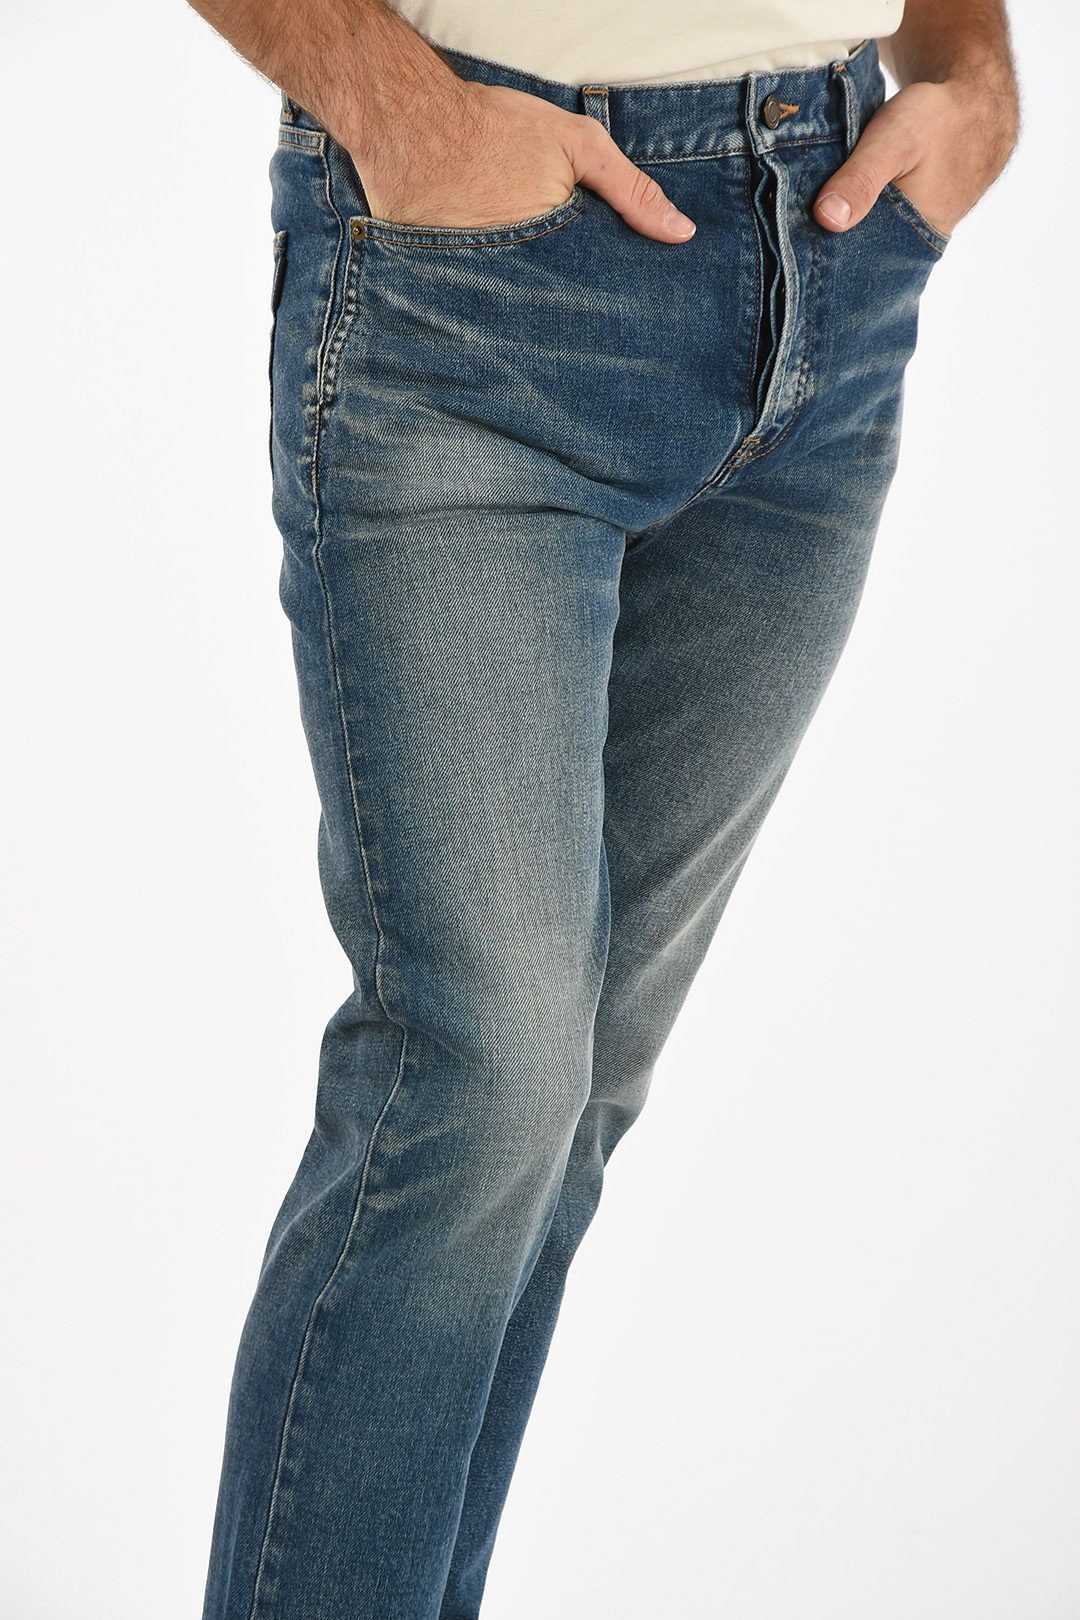 ASOS DESIGN baggy jeans in light stone wash blue | ASOS-saigonsouth.com.vn